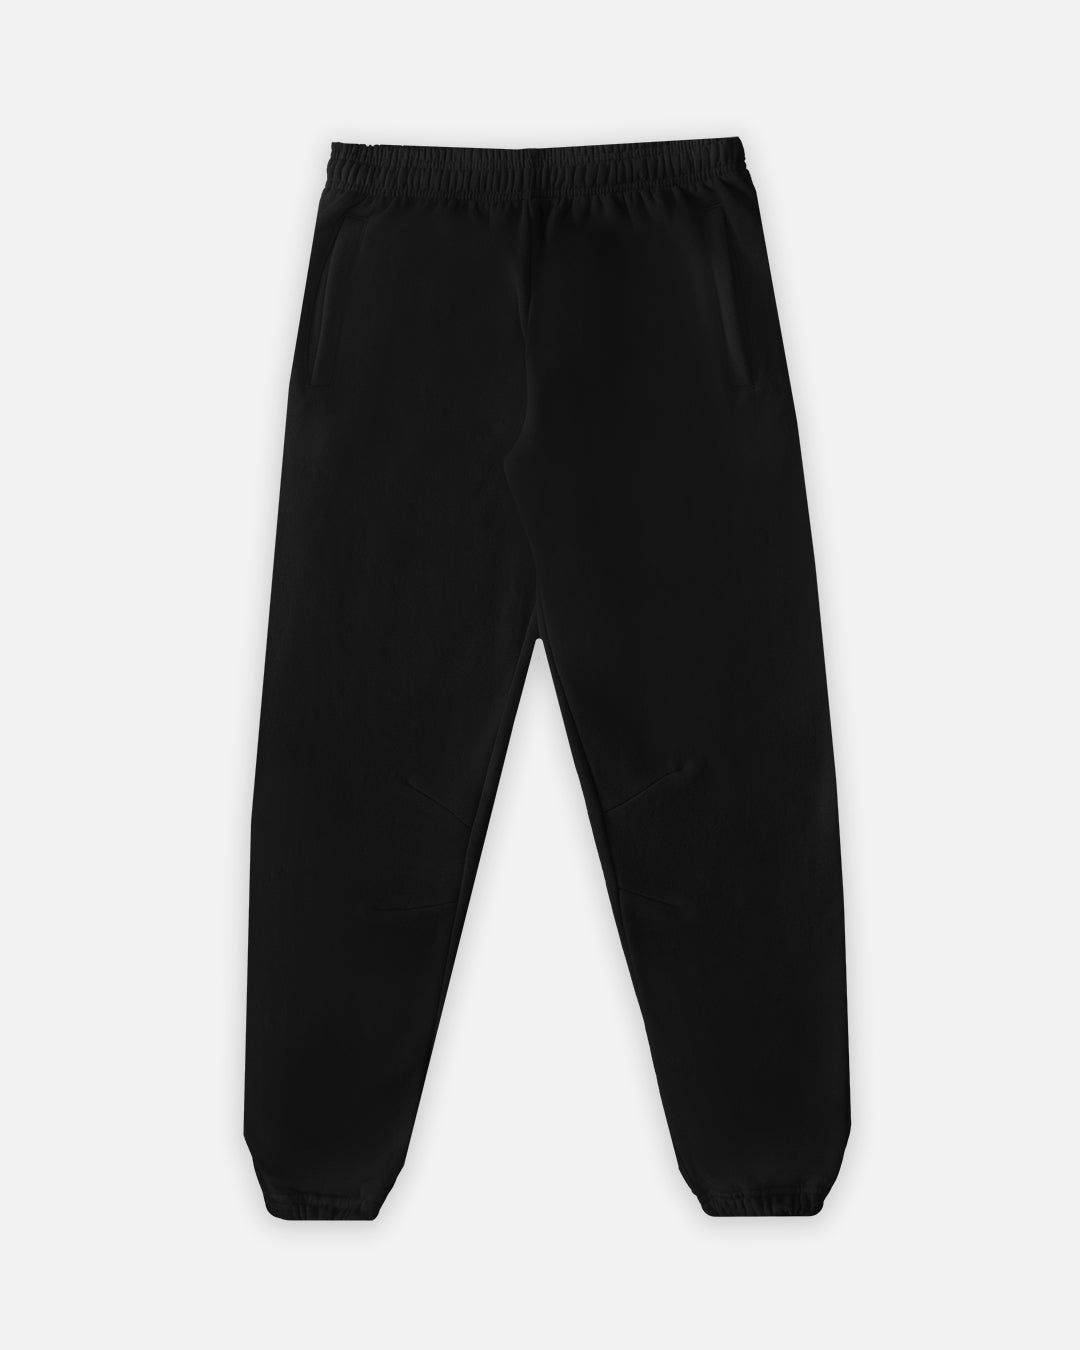 black sweatpants